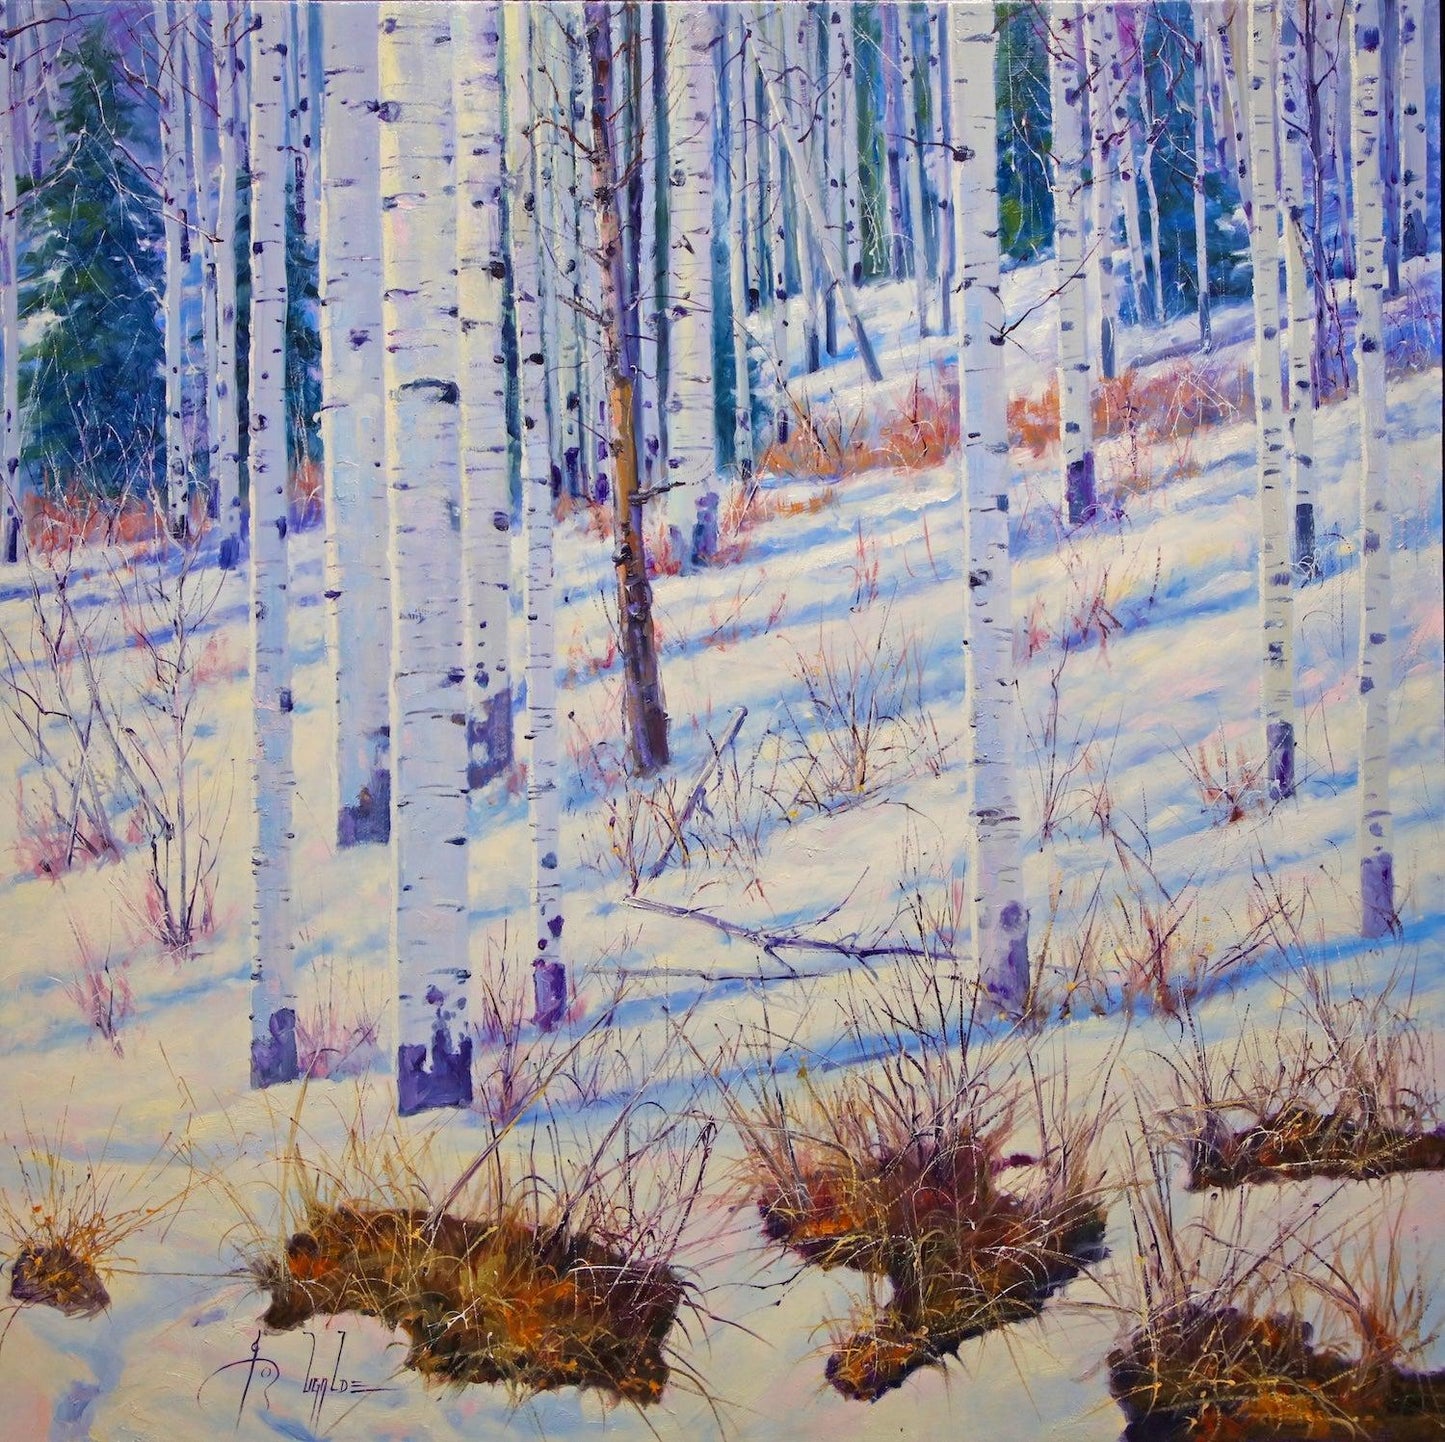 Morning Winter-Painting-Roberto Ugalde-Sorrel Sky Gallery